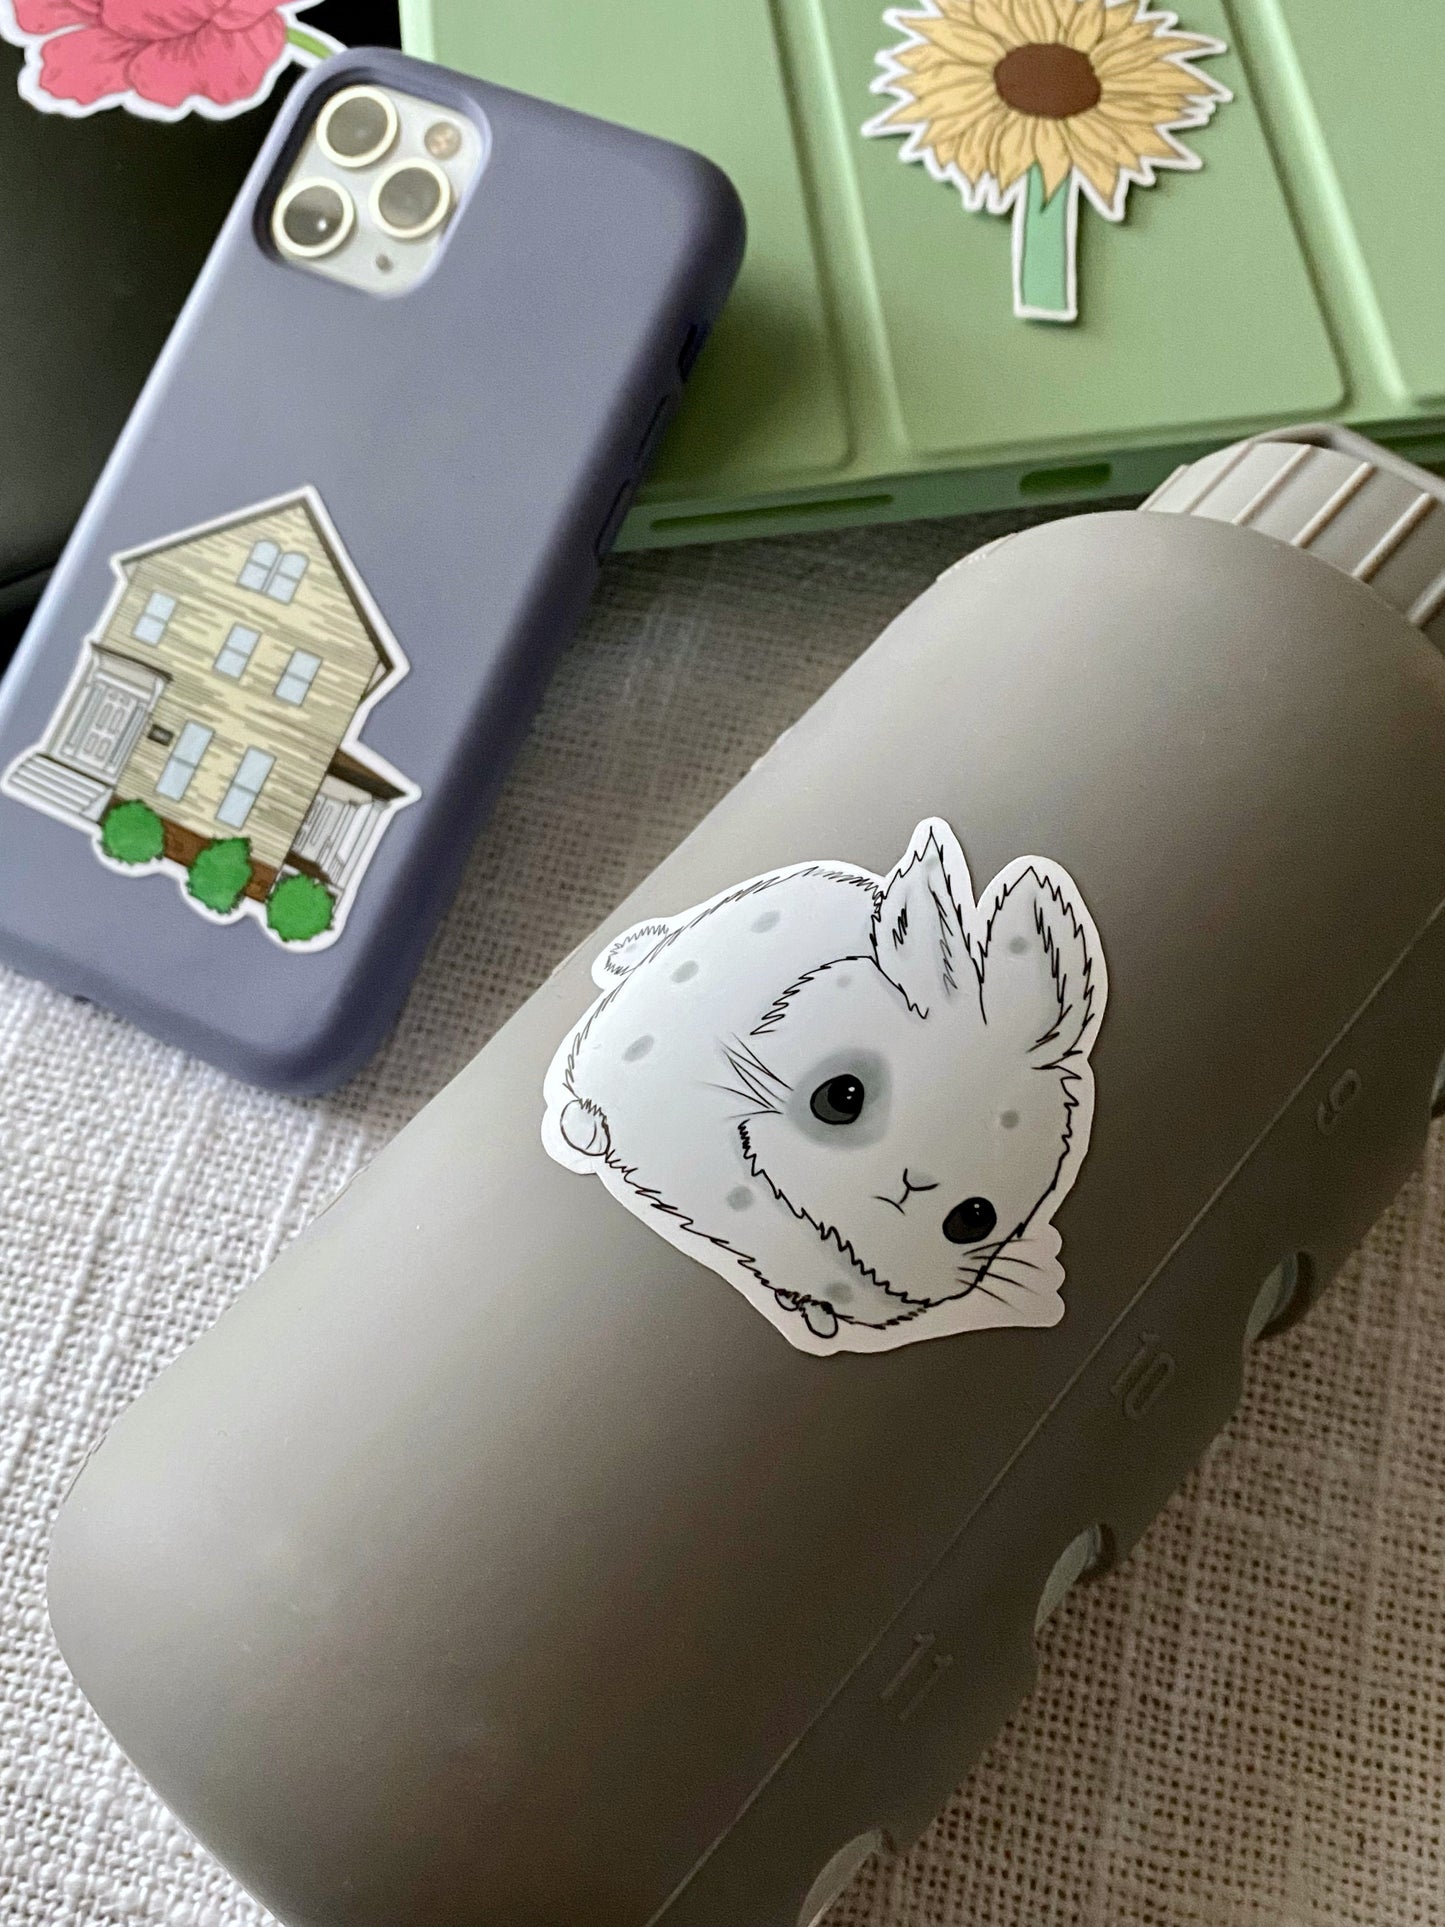 Brown Bunny Sticker